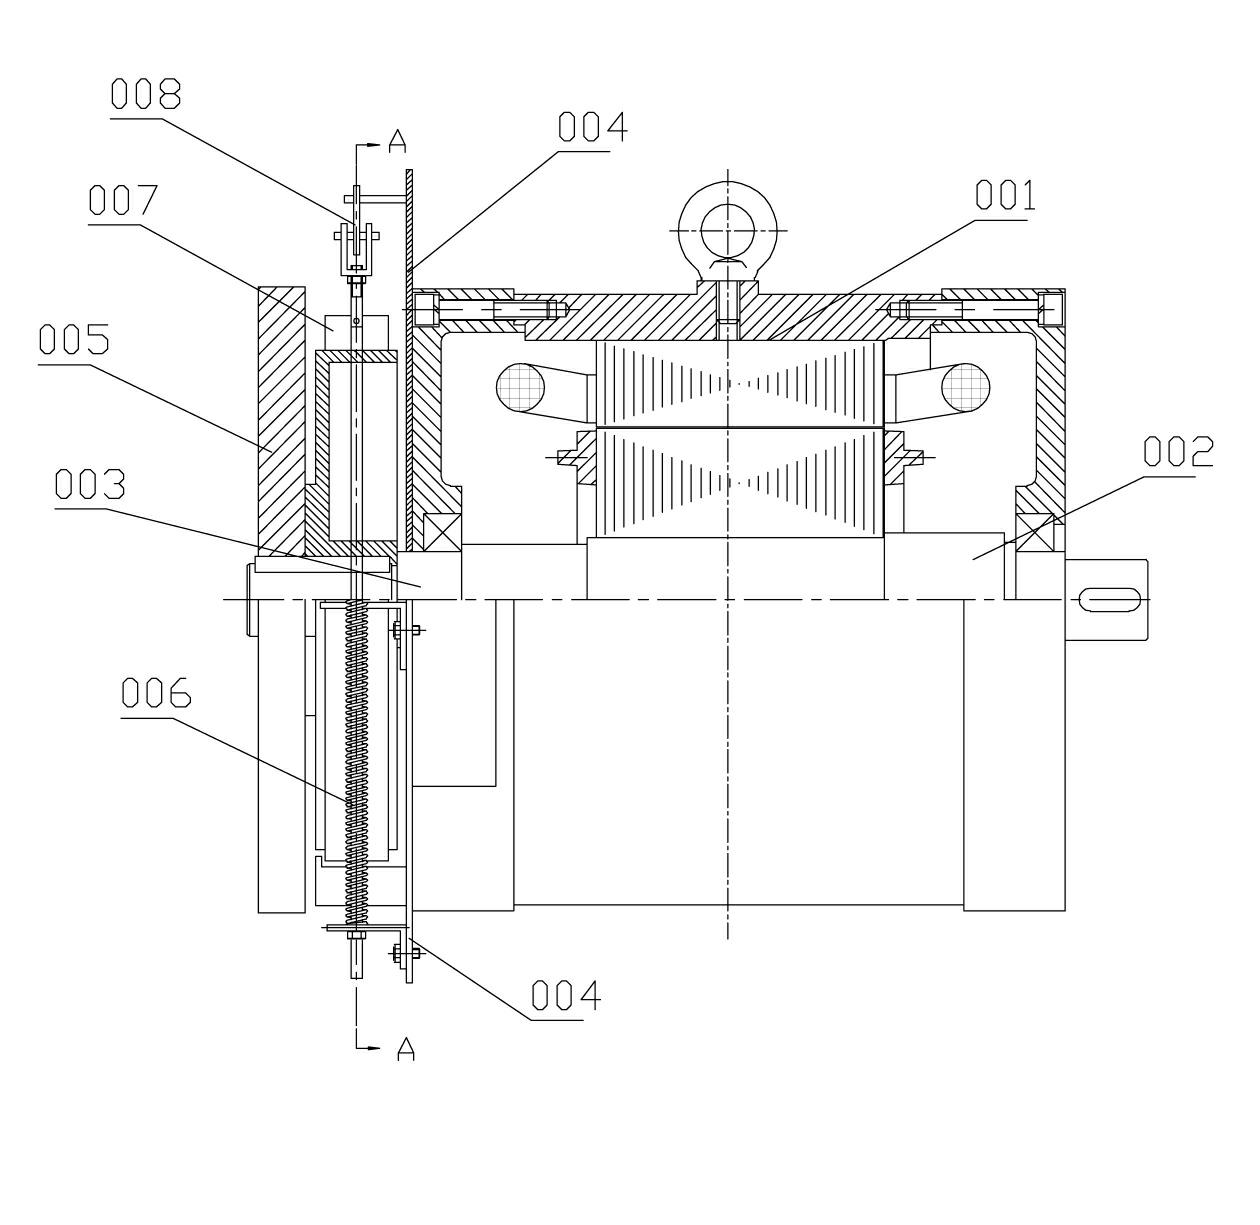 Power-off braking mechanism for main brake of escalator